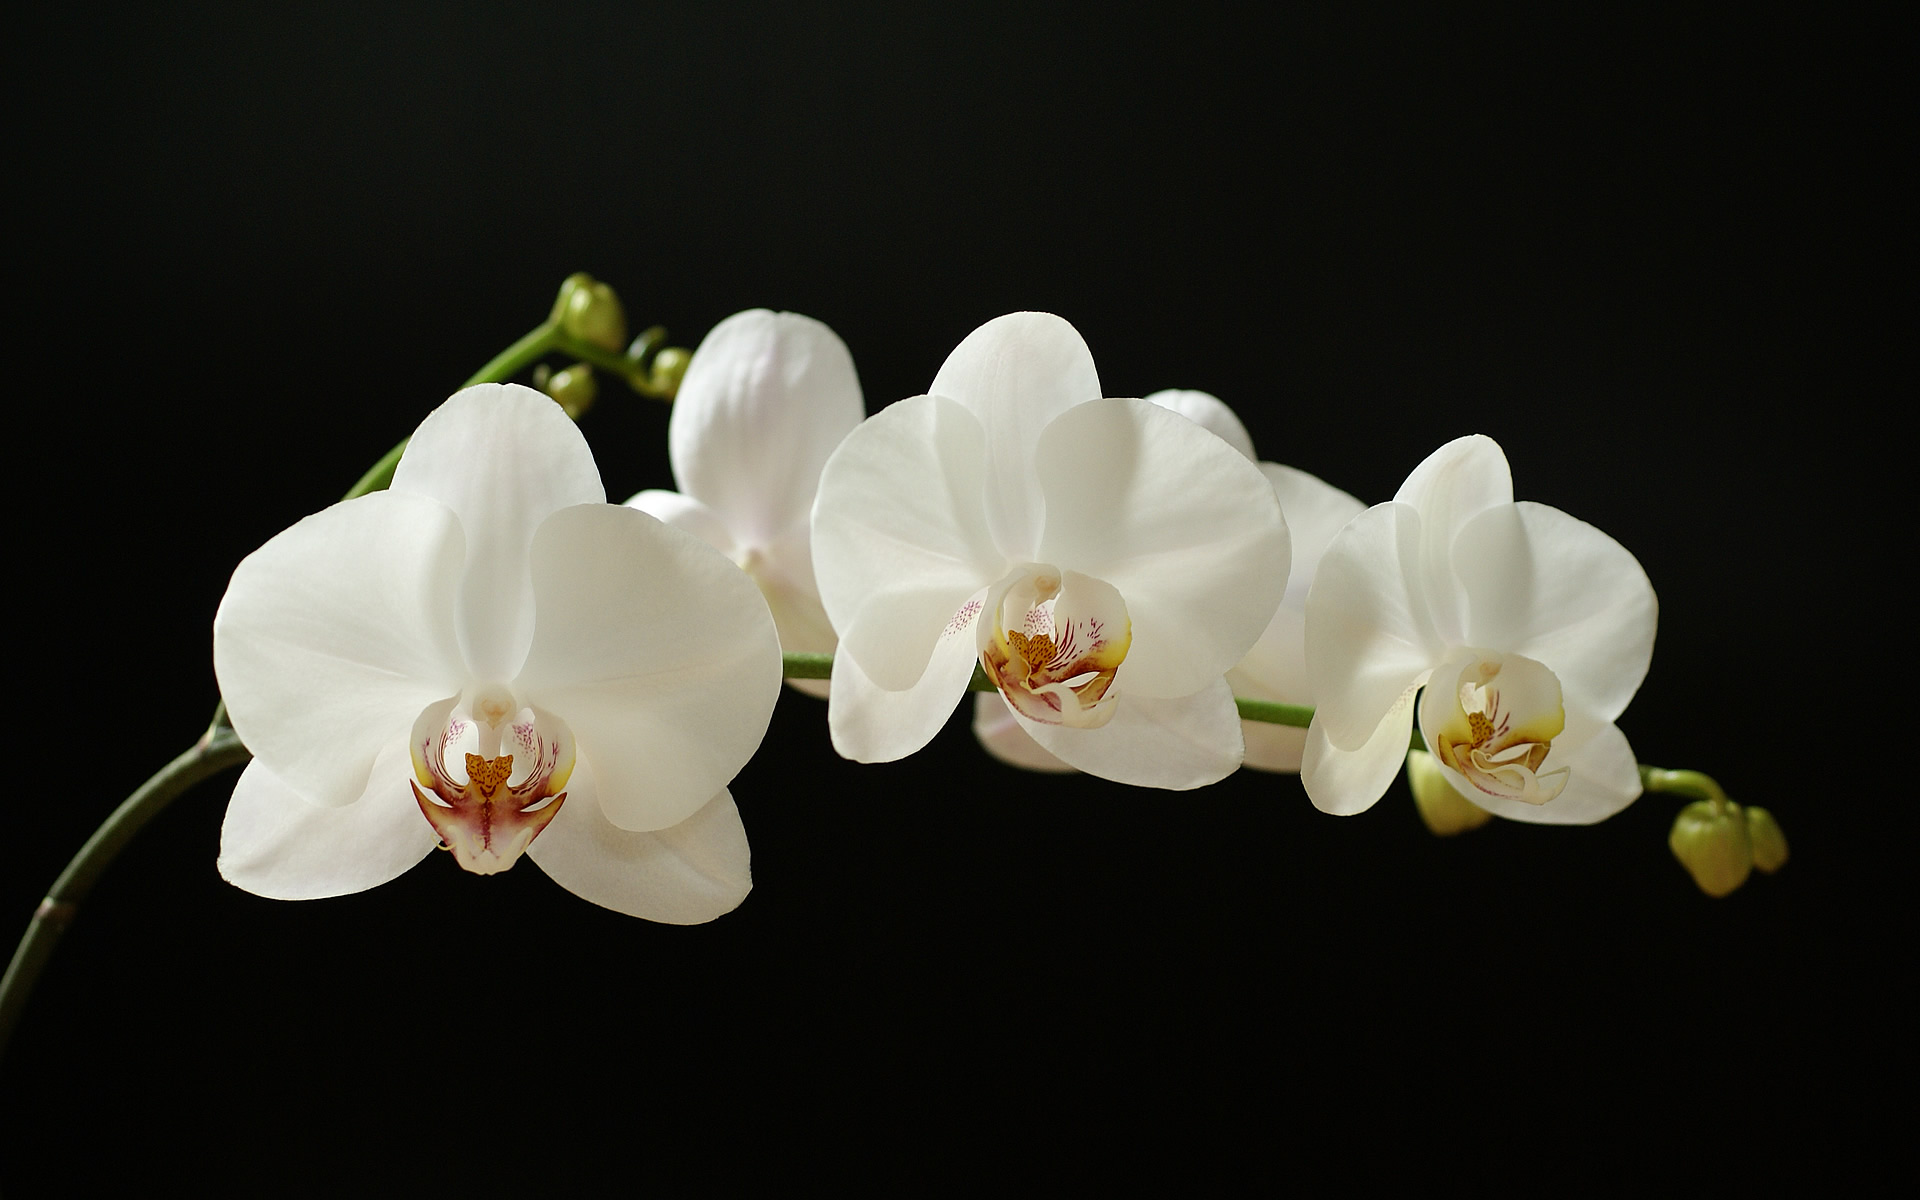 gaeroladid: White Orchids Images